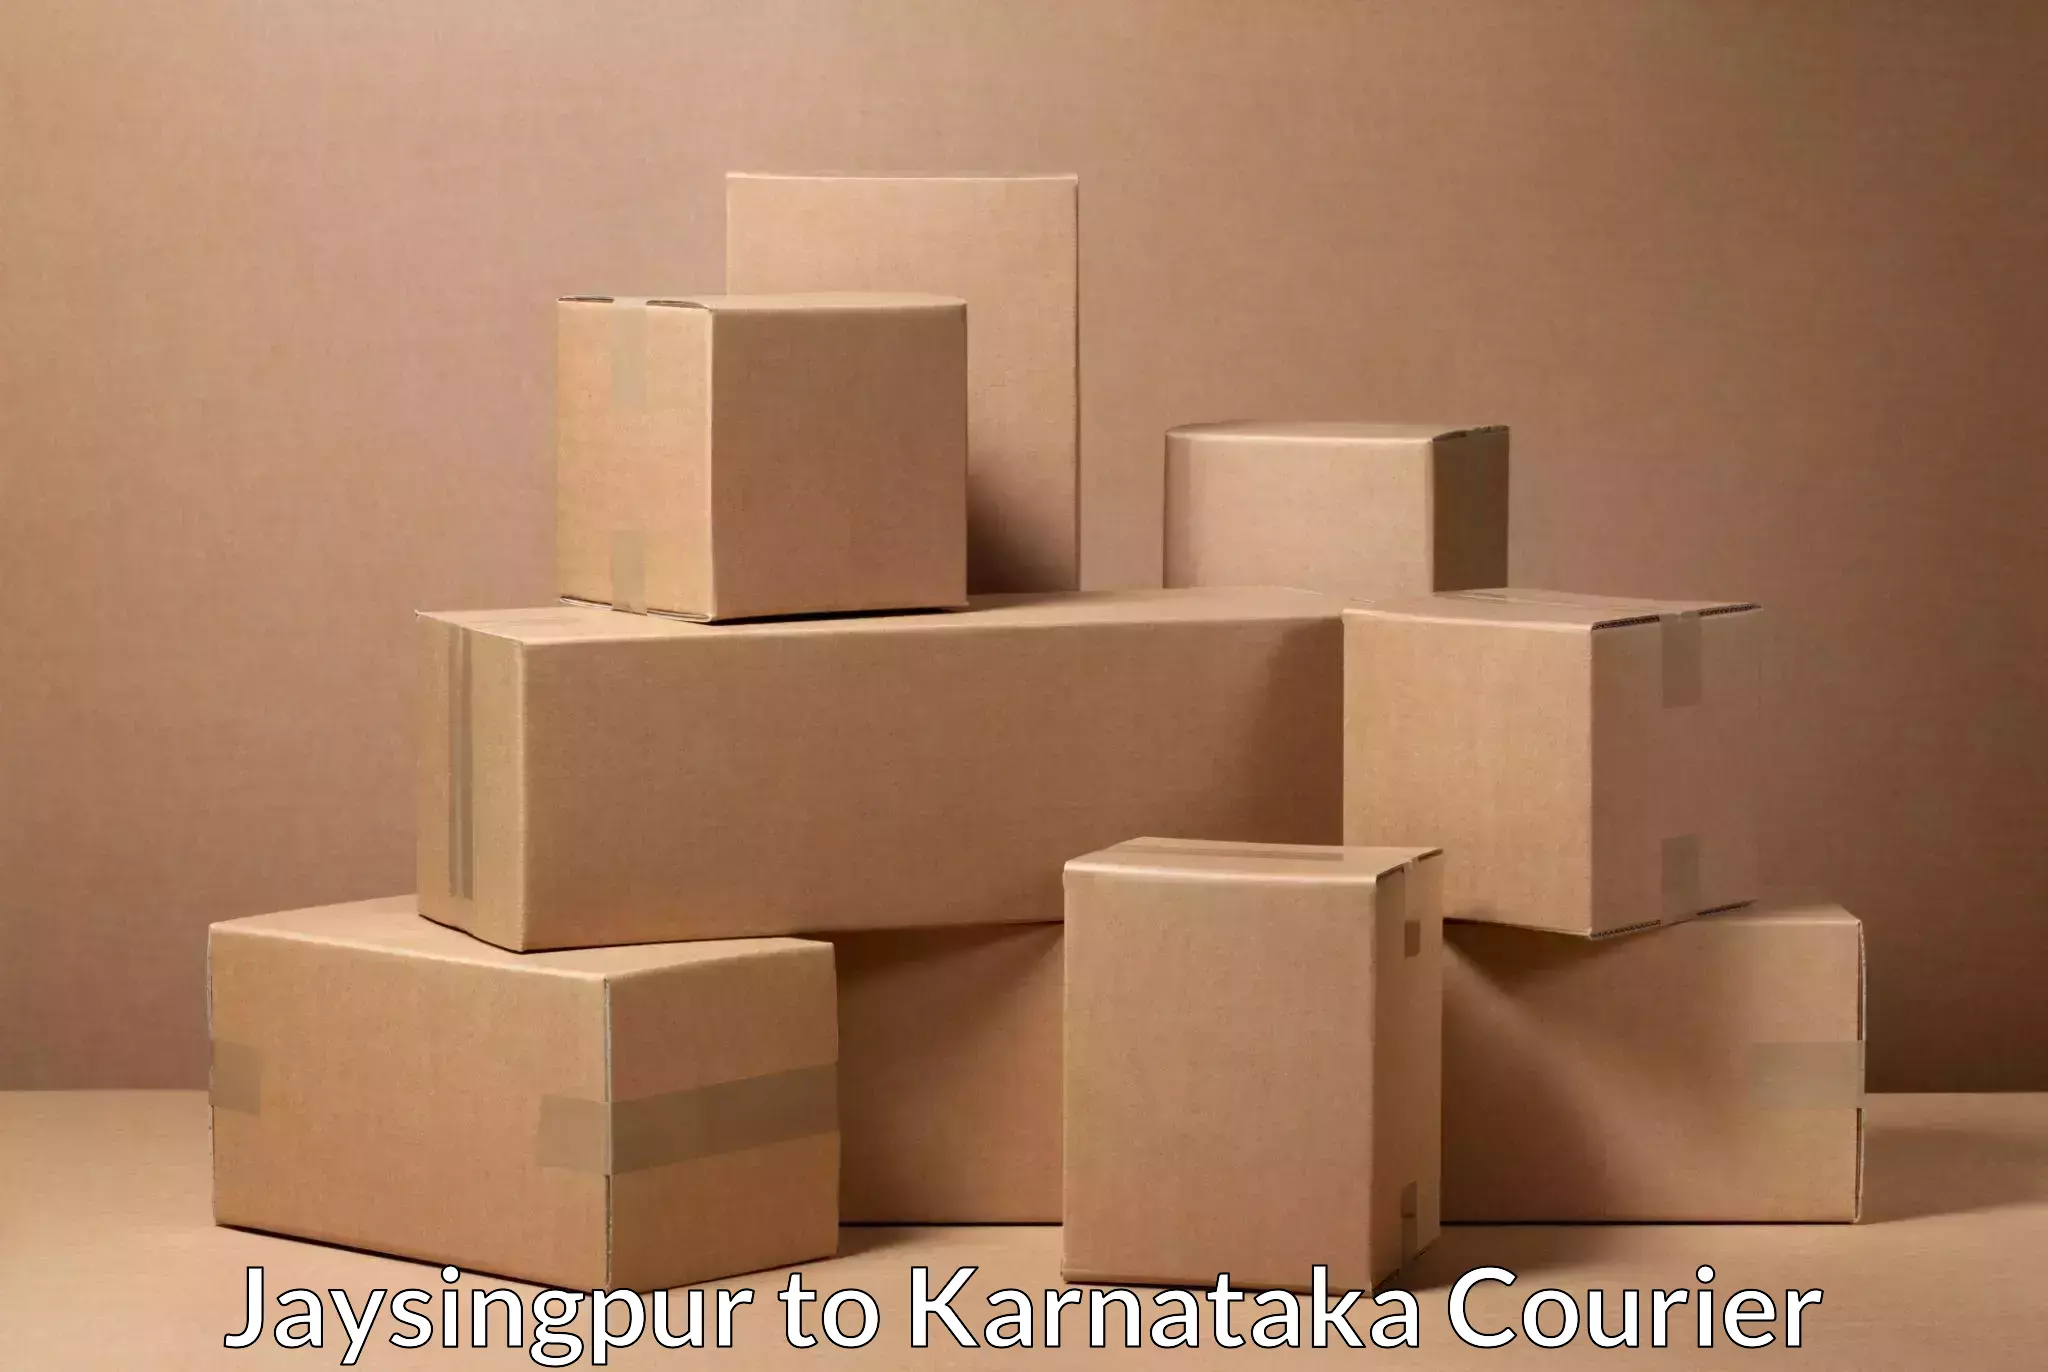 Reliable logistics providers Jaysingpur to Chikkamagalur